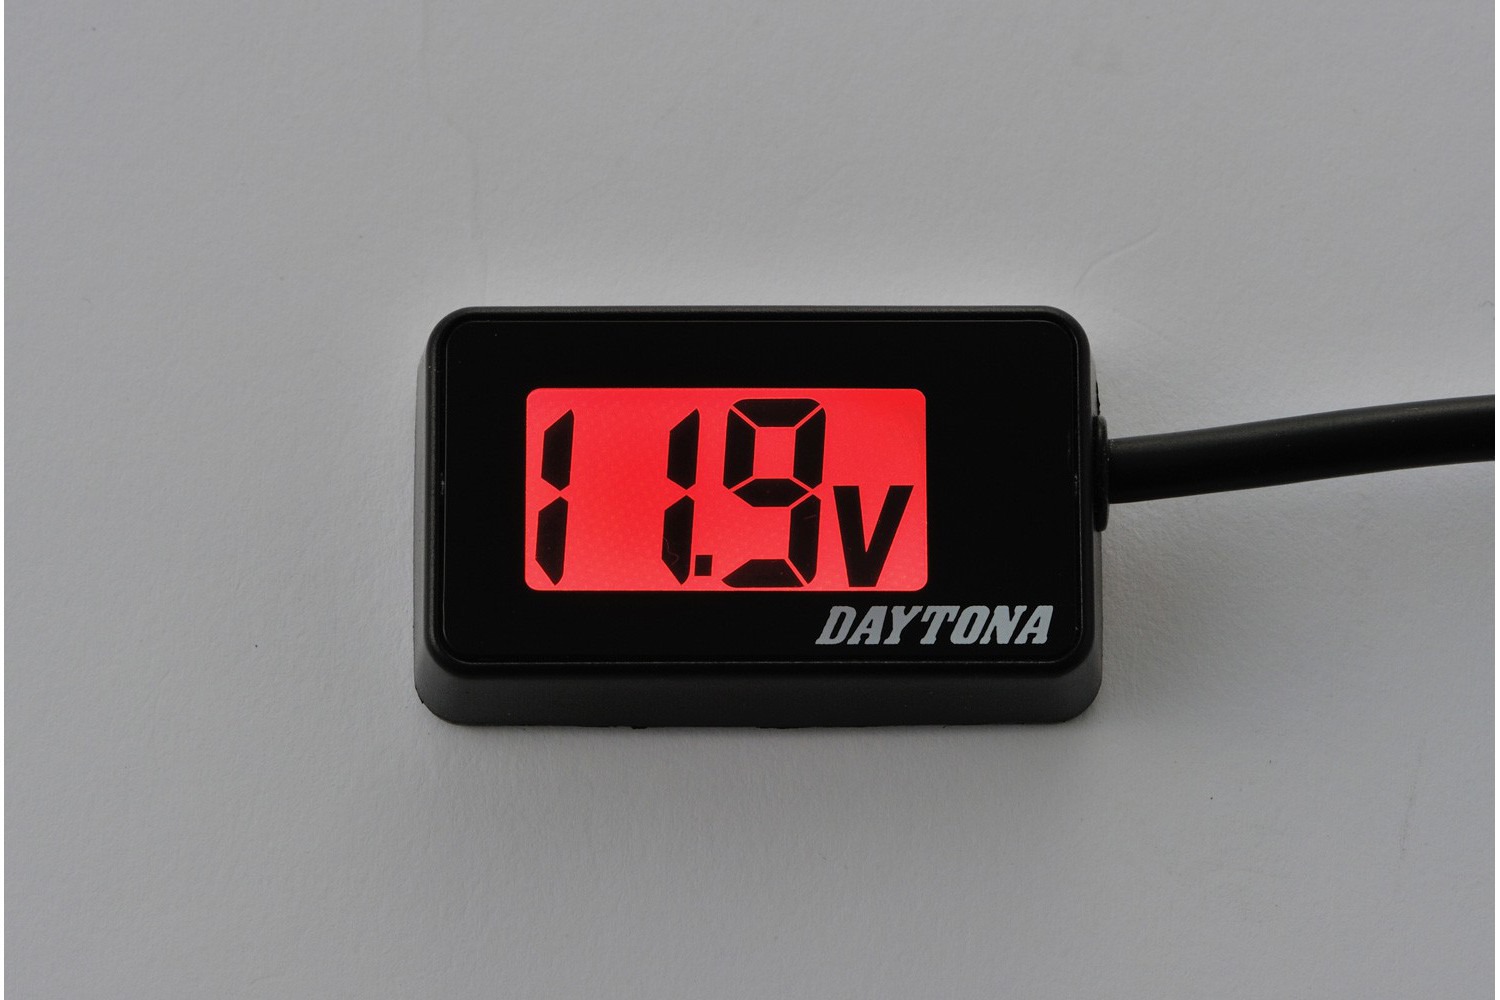 Obrázek produktu LCD ukazatel napětí (voltmetr), Daytona 89279